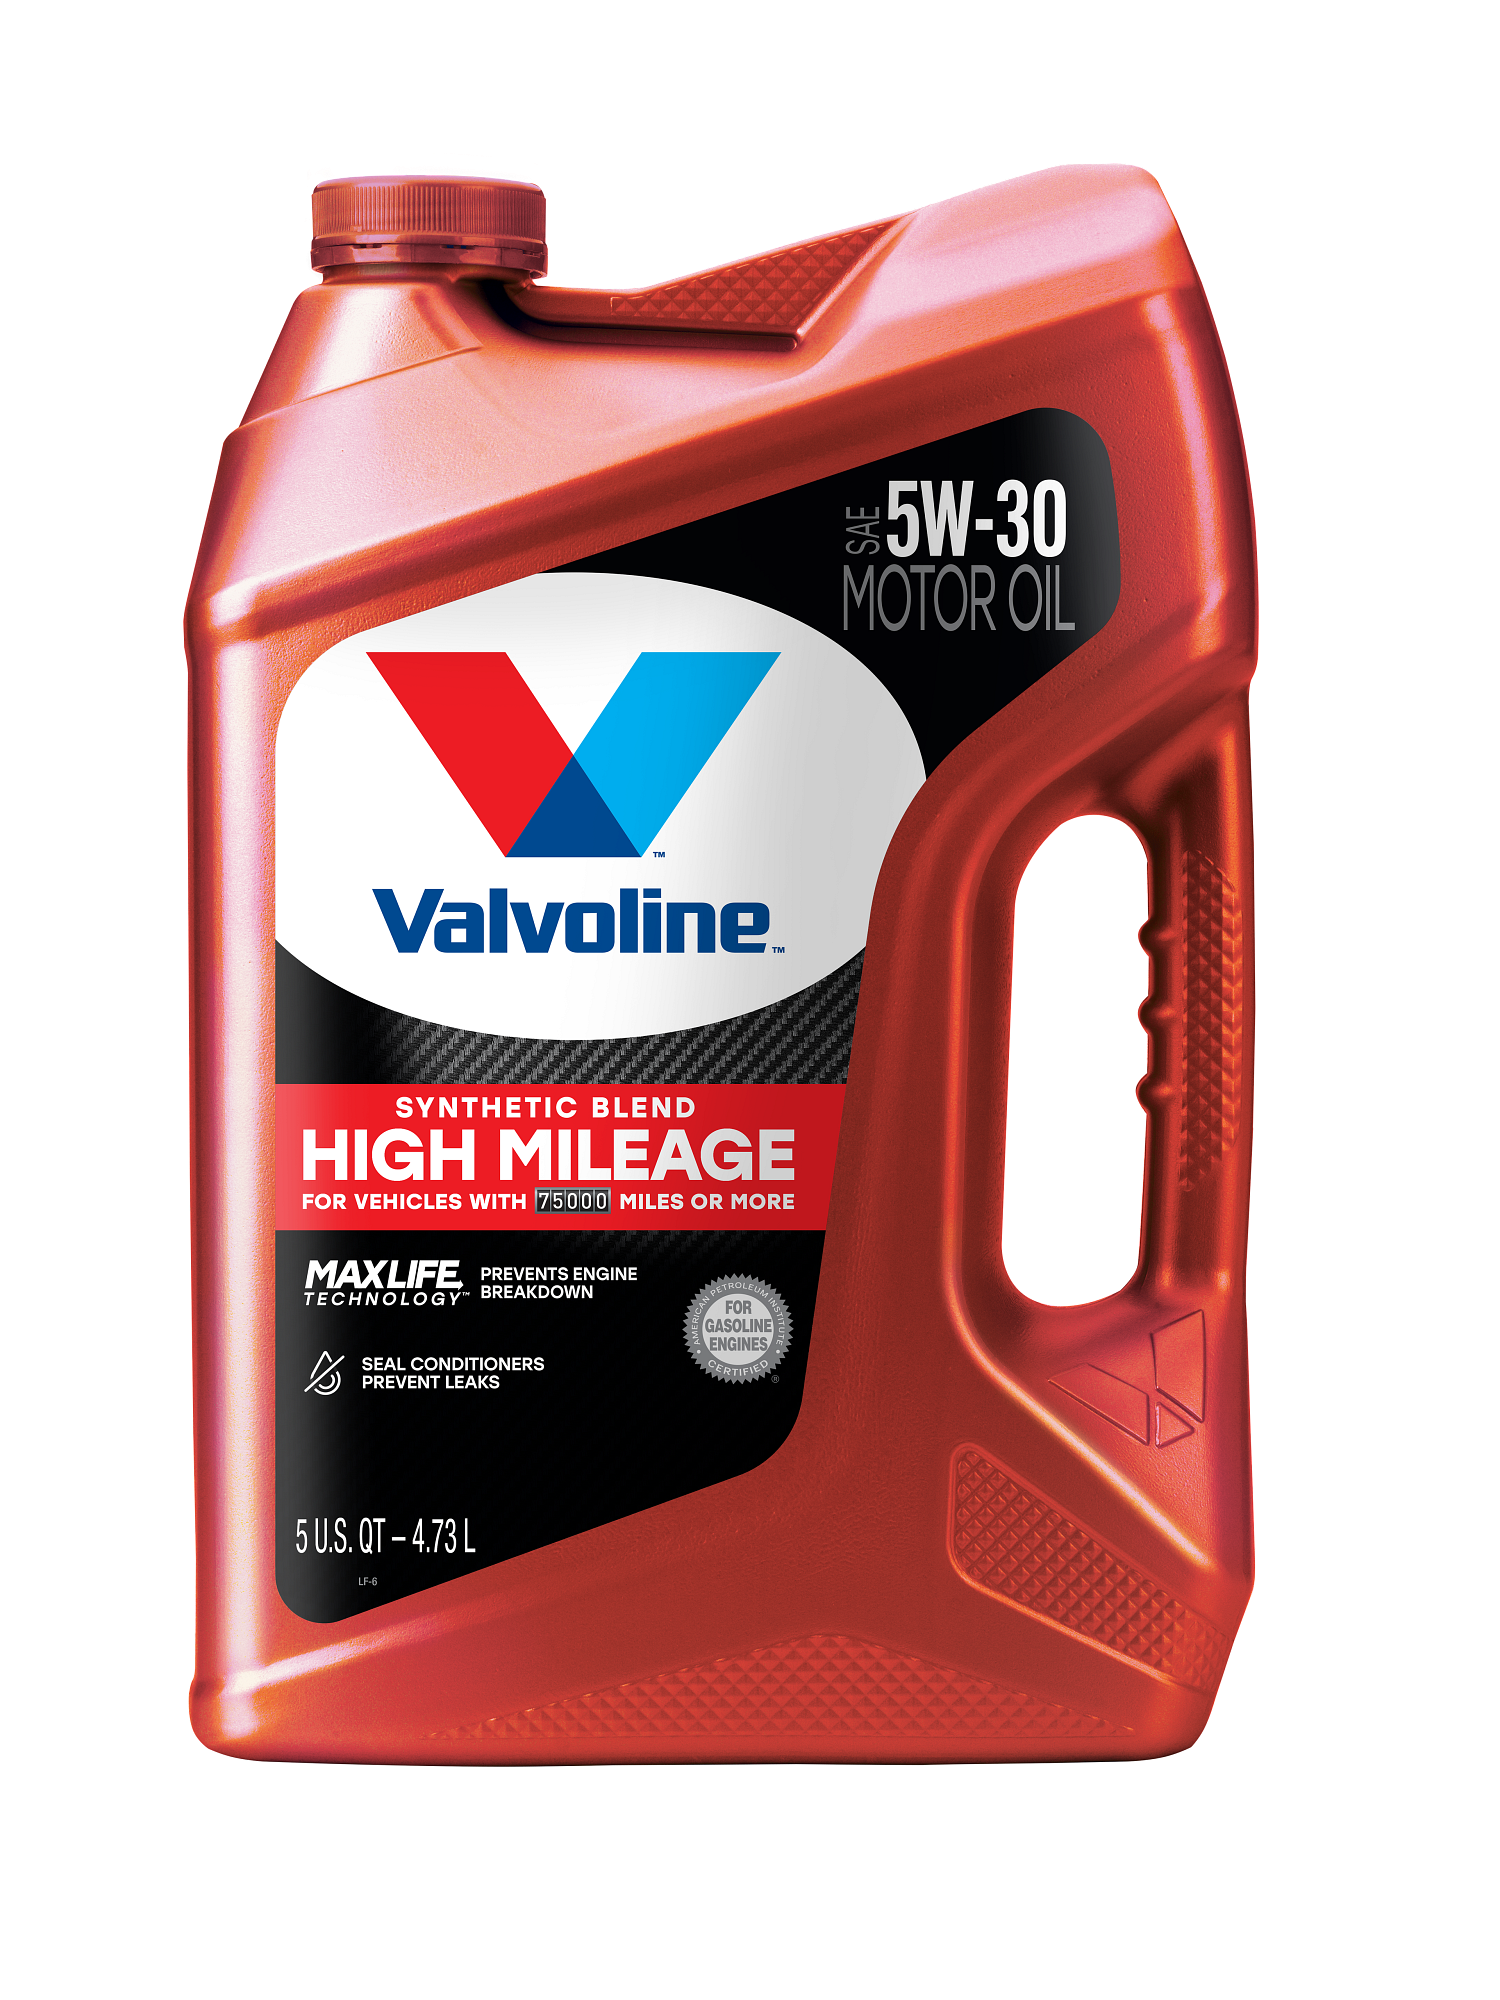 Valvoline　MaxLife　with　SAE　High　Mileage　Oil　Technology　Motor　5W-30